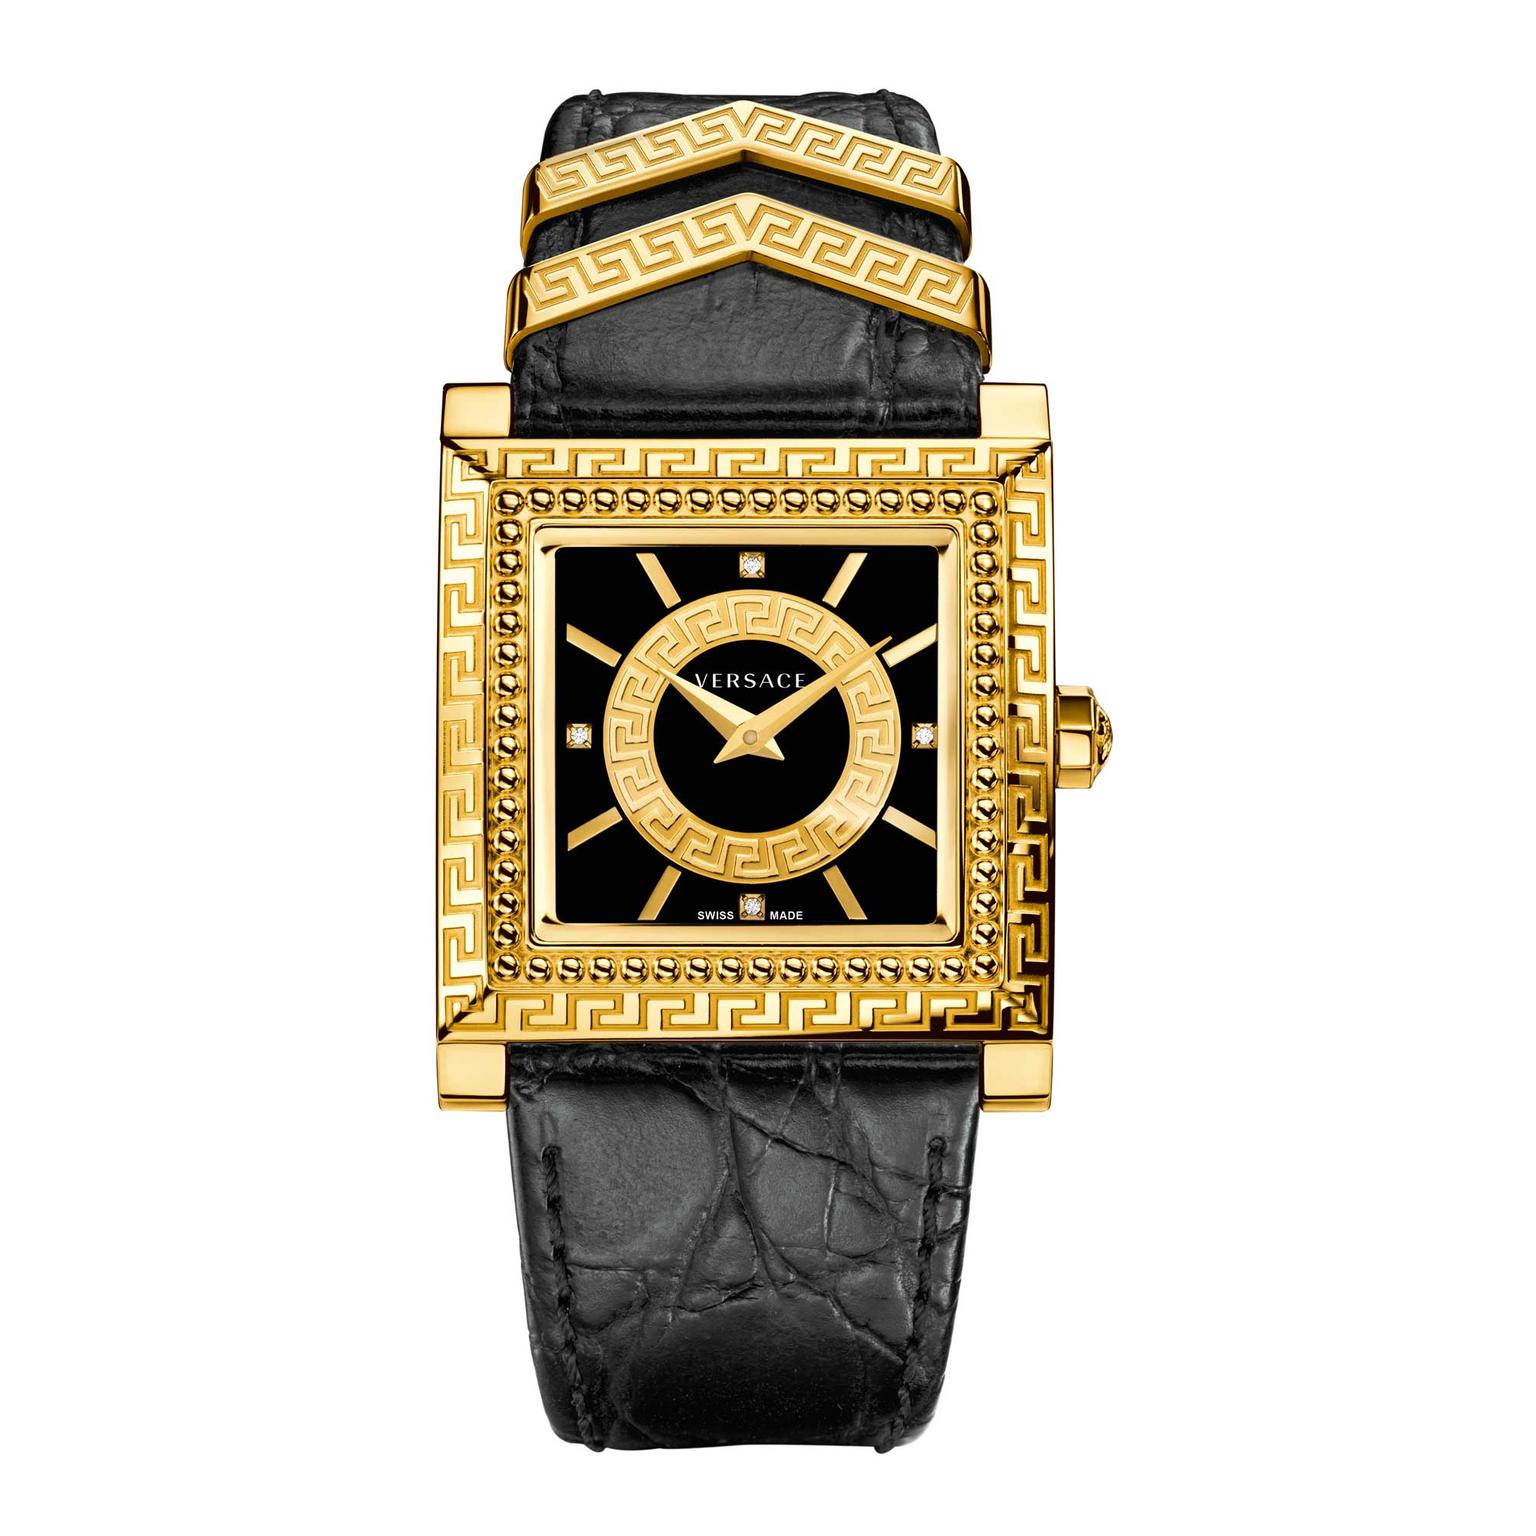 Versace DV-25 watch